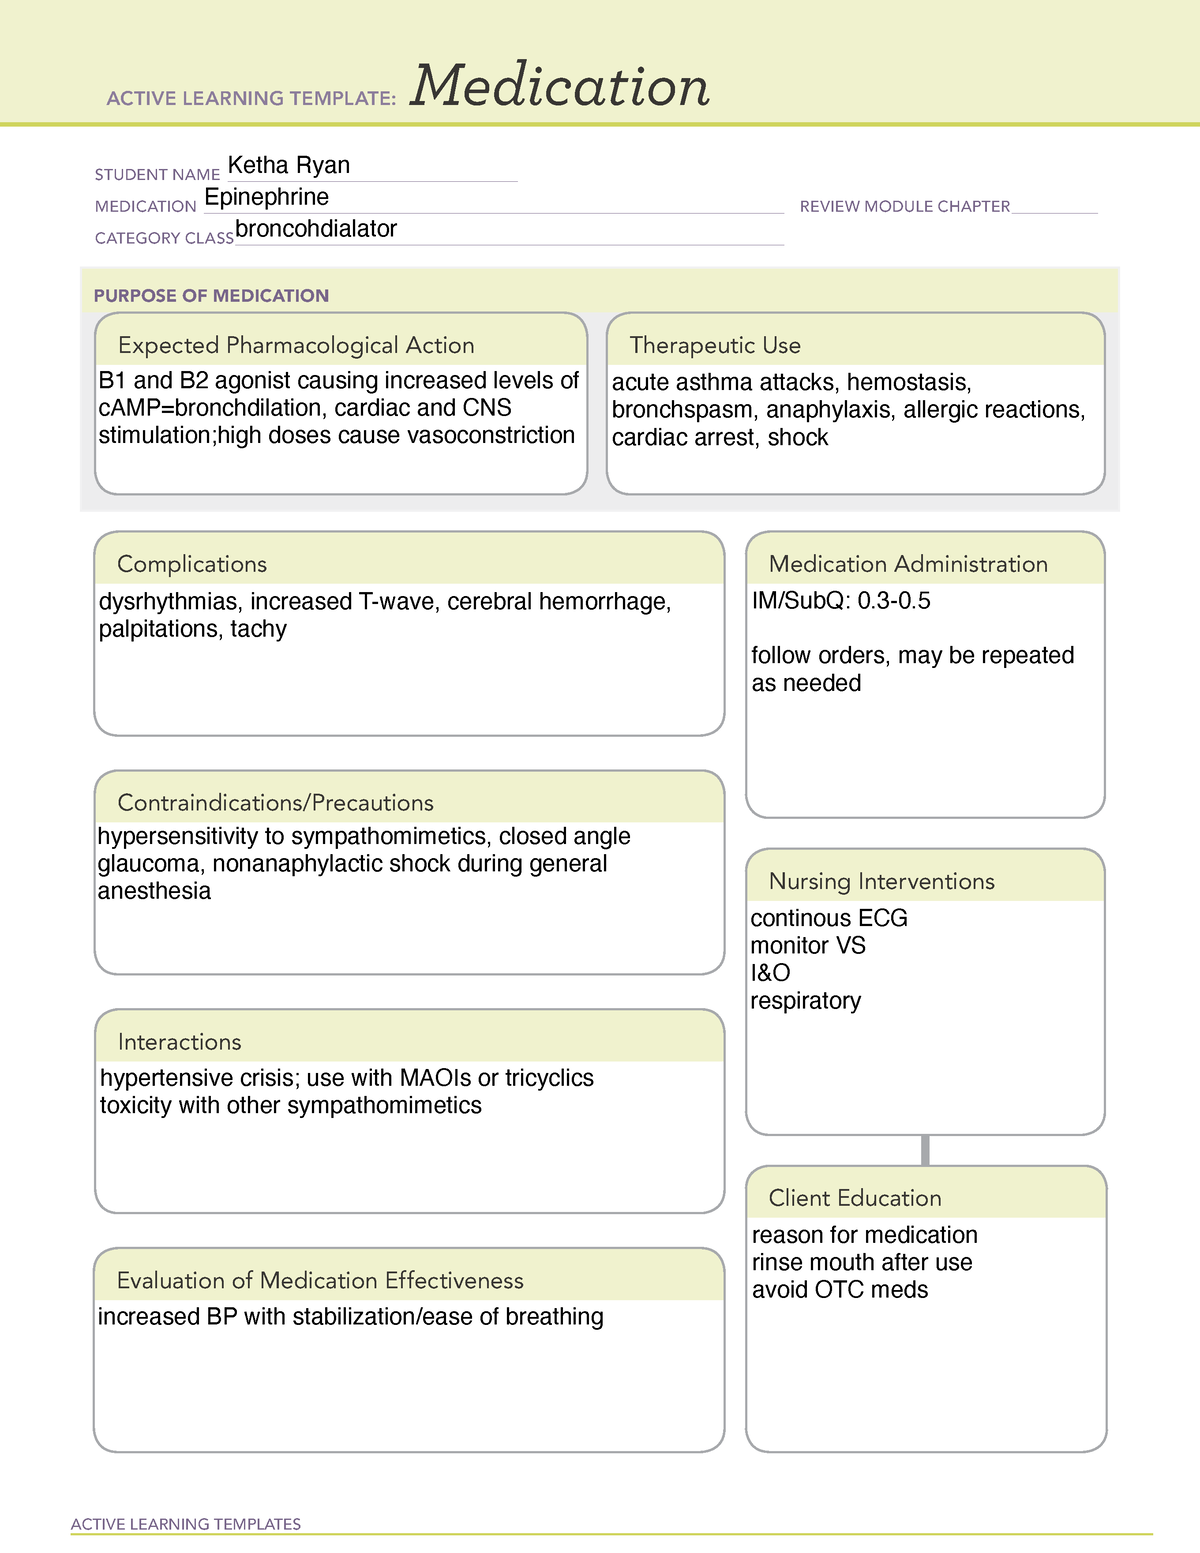 ati-epinephrine-ati-med-template-active-learning-templates-medication-student-name-studocu